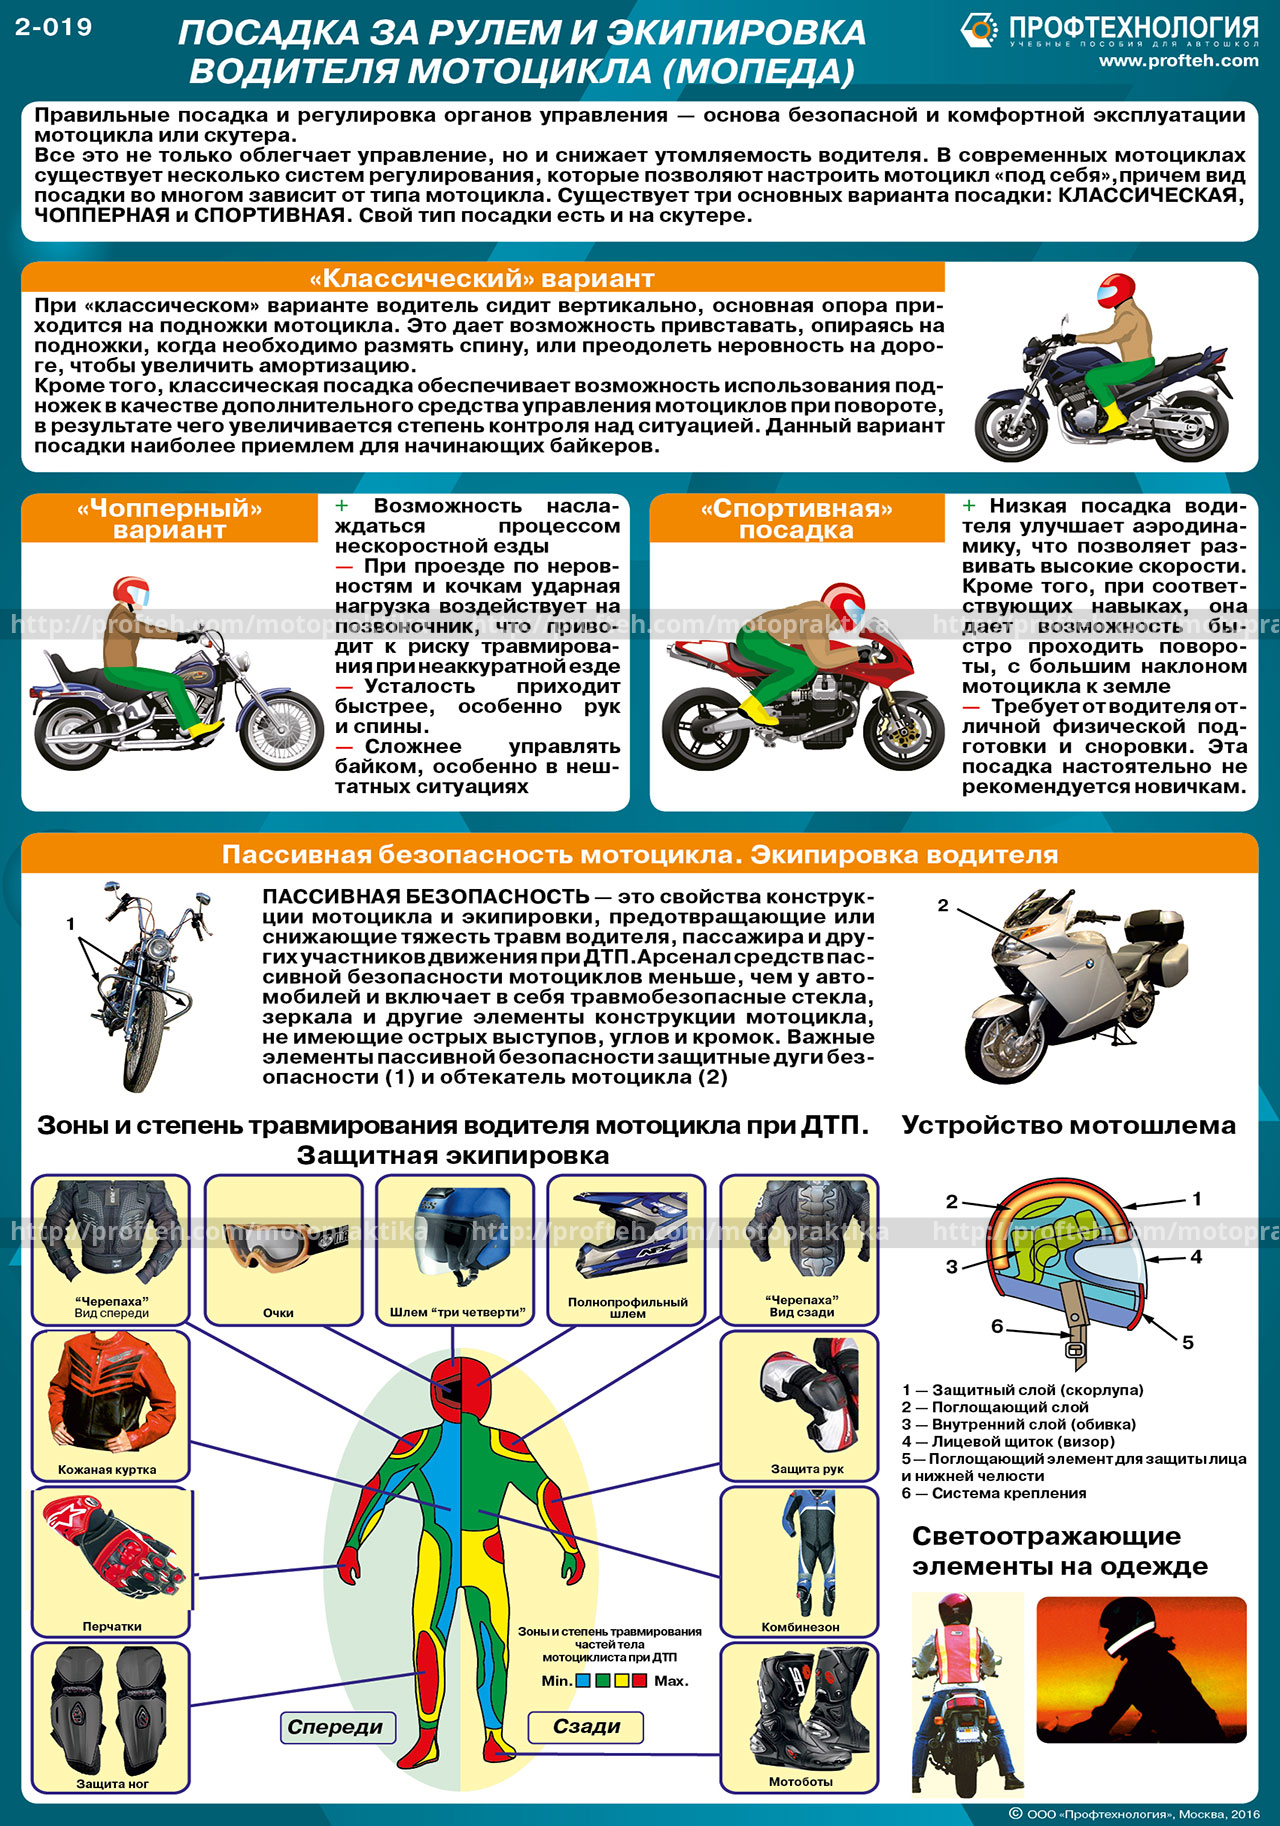 Категории водителя мотоцикла